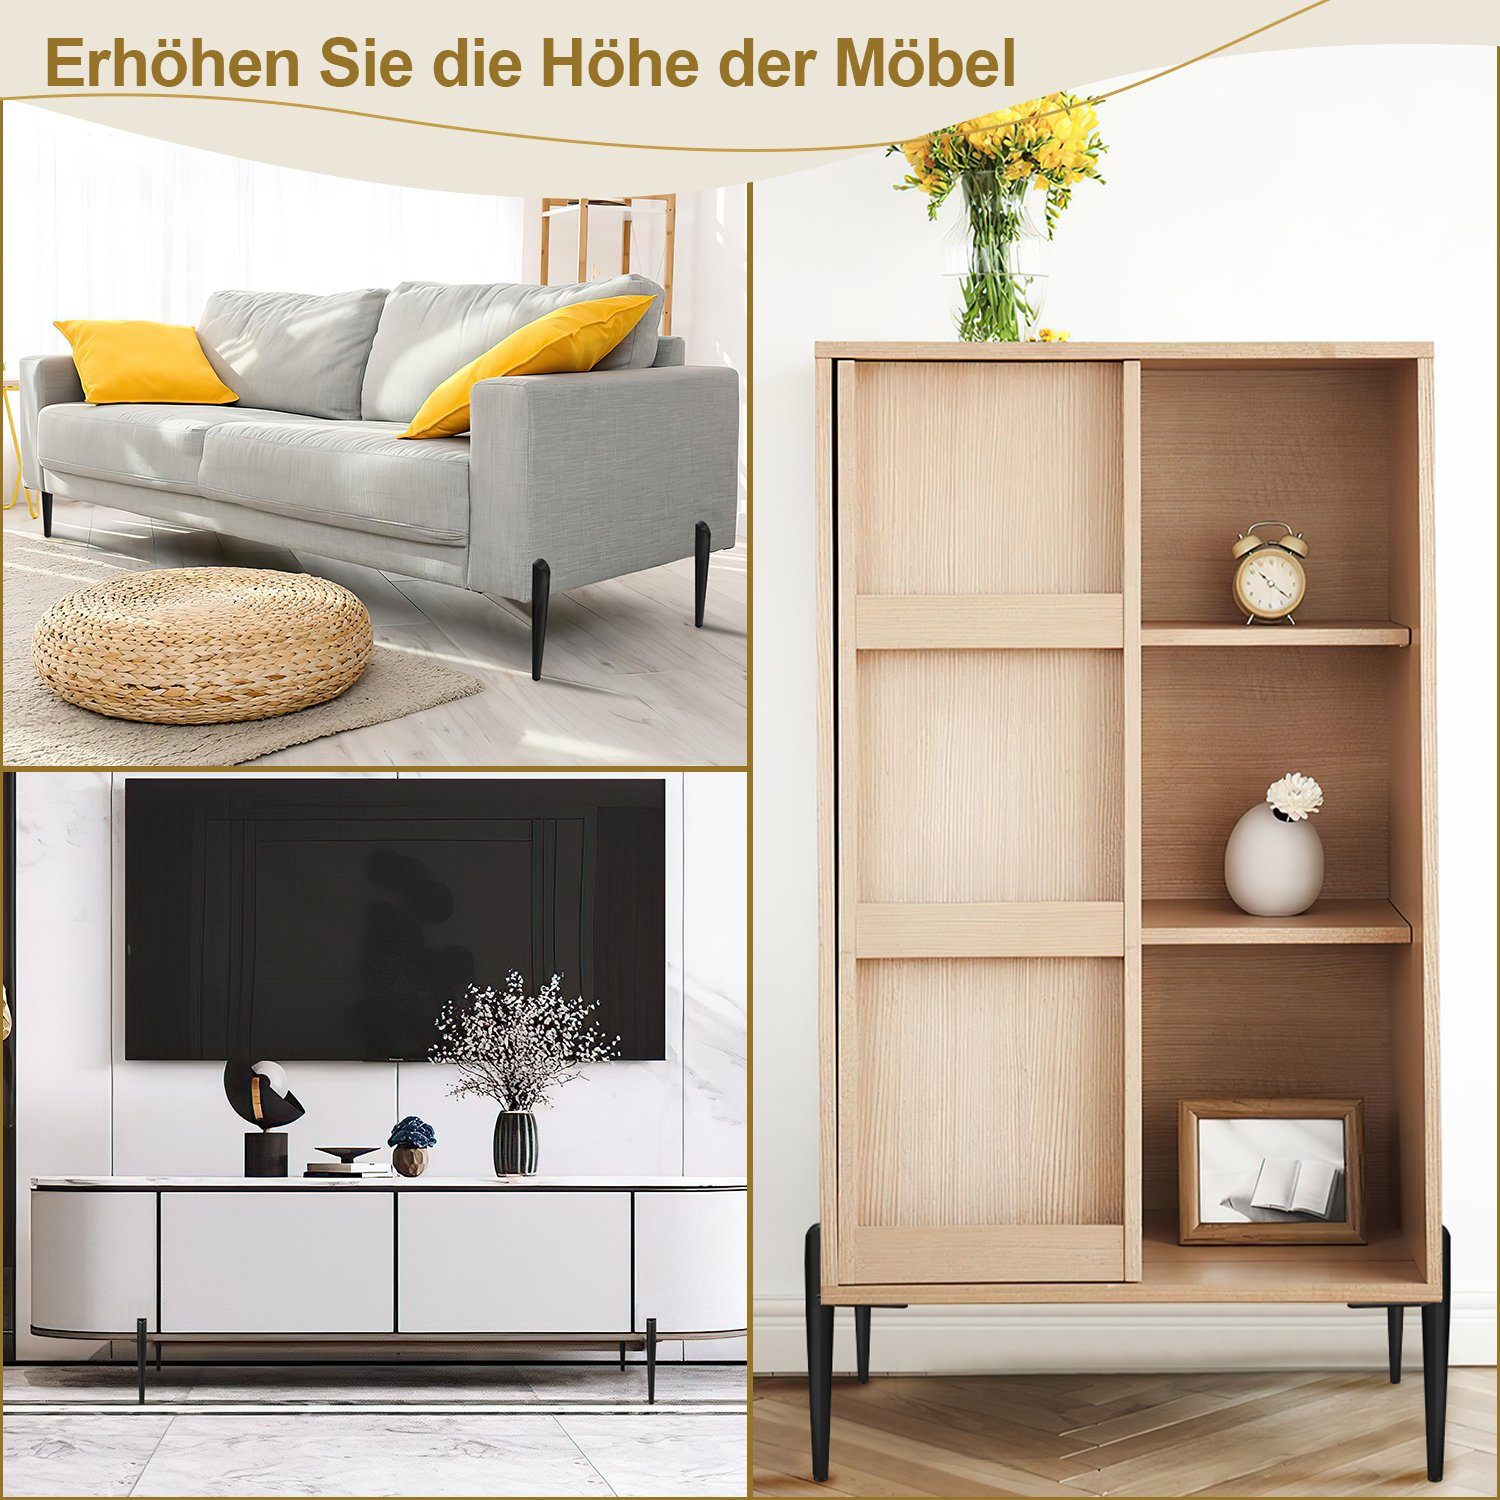 Couchfüße Möbelfüße Möbelfuß Verstellbar 15CM Gold 4X Lospitch Edelstahl Gleitfuß Sockelfüße